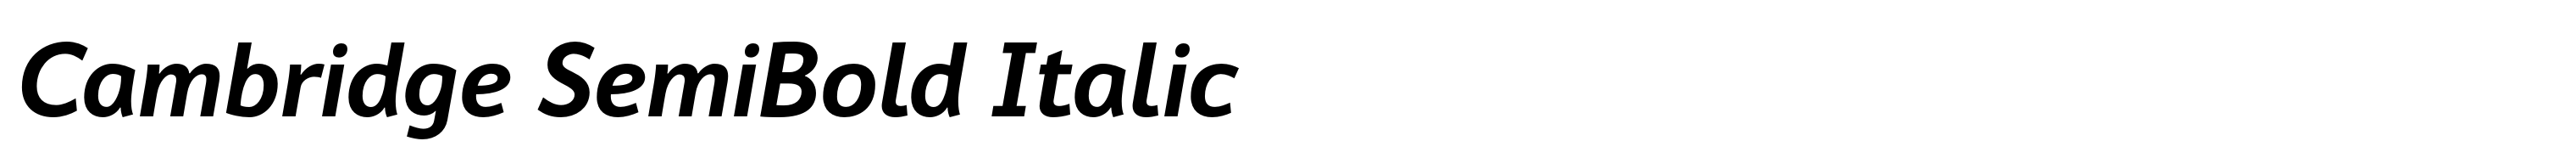 Cambridge SemiBold Italic